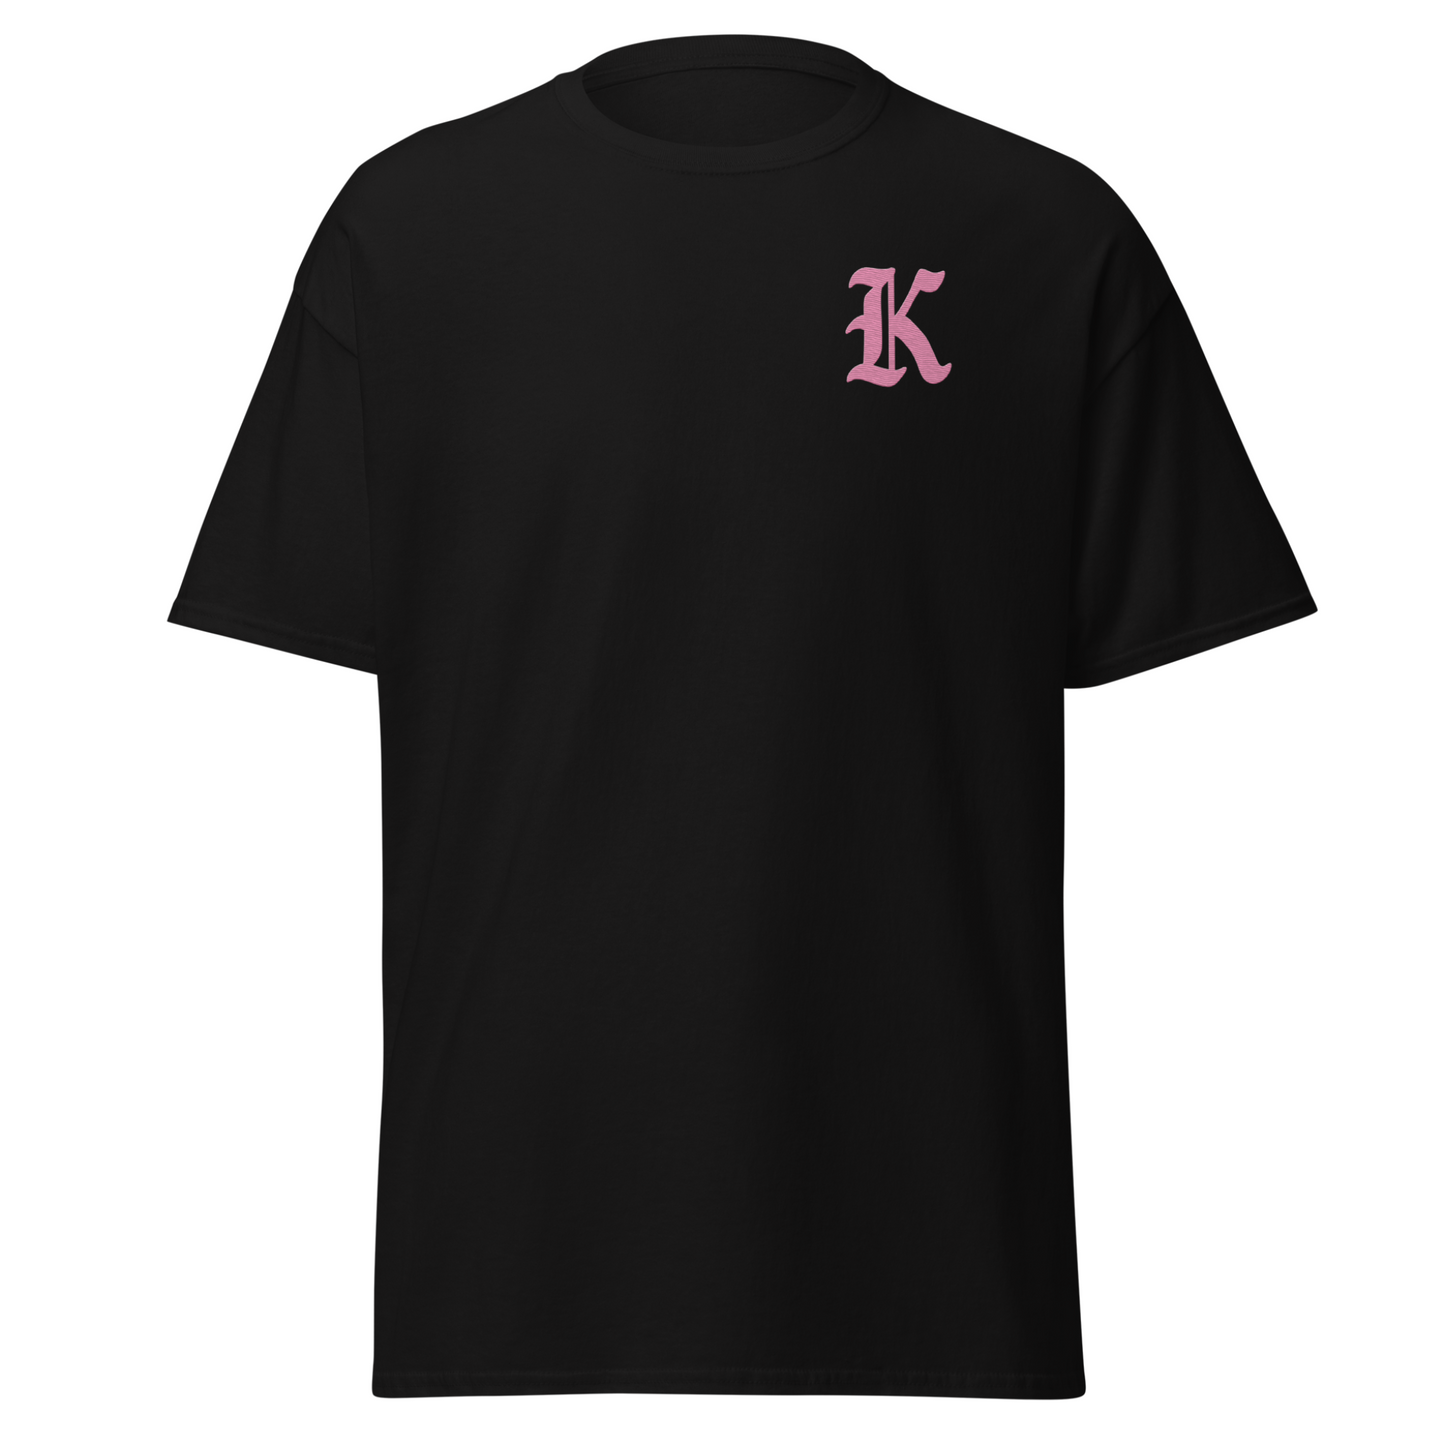 Dept. of Kenergy Shirt in Black